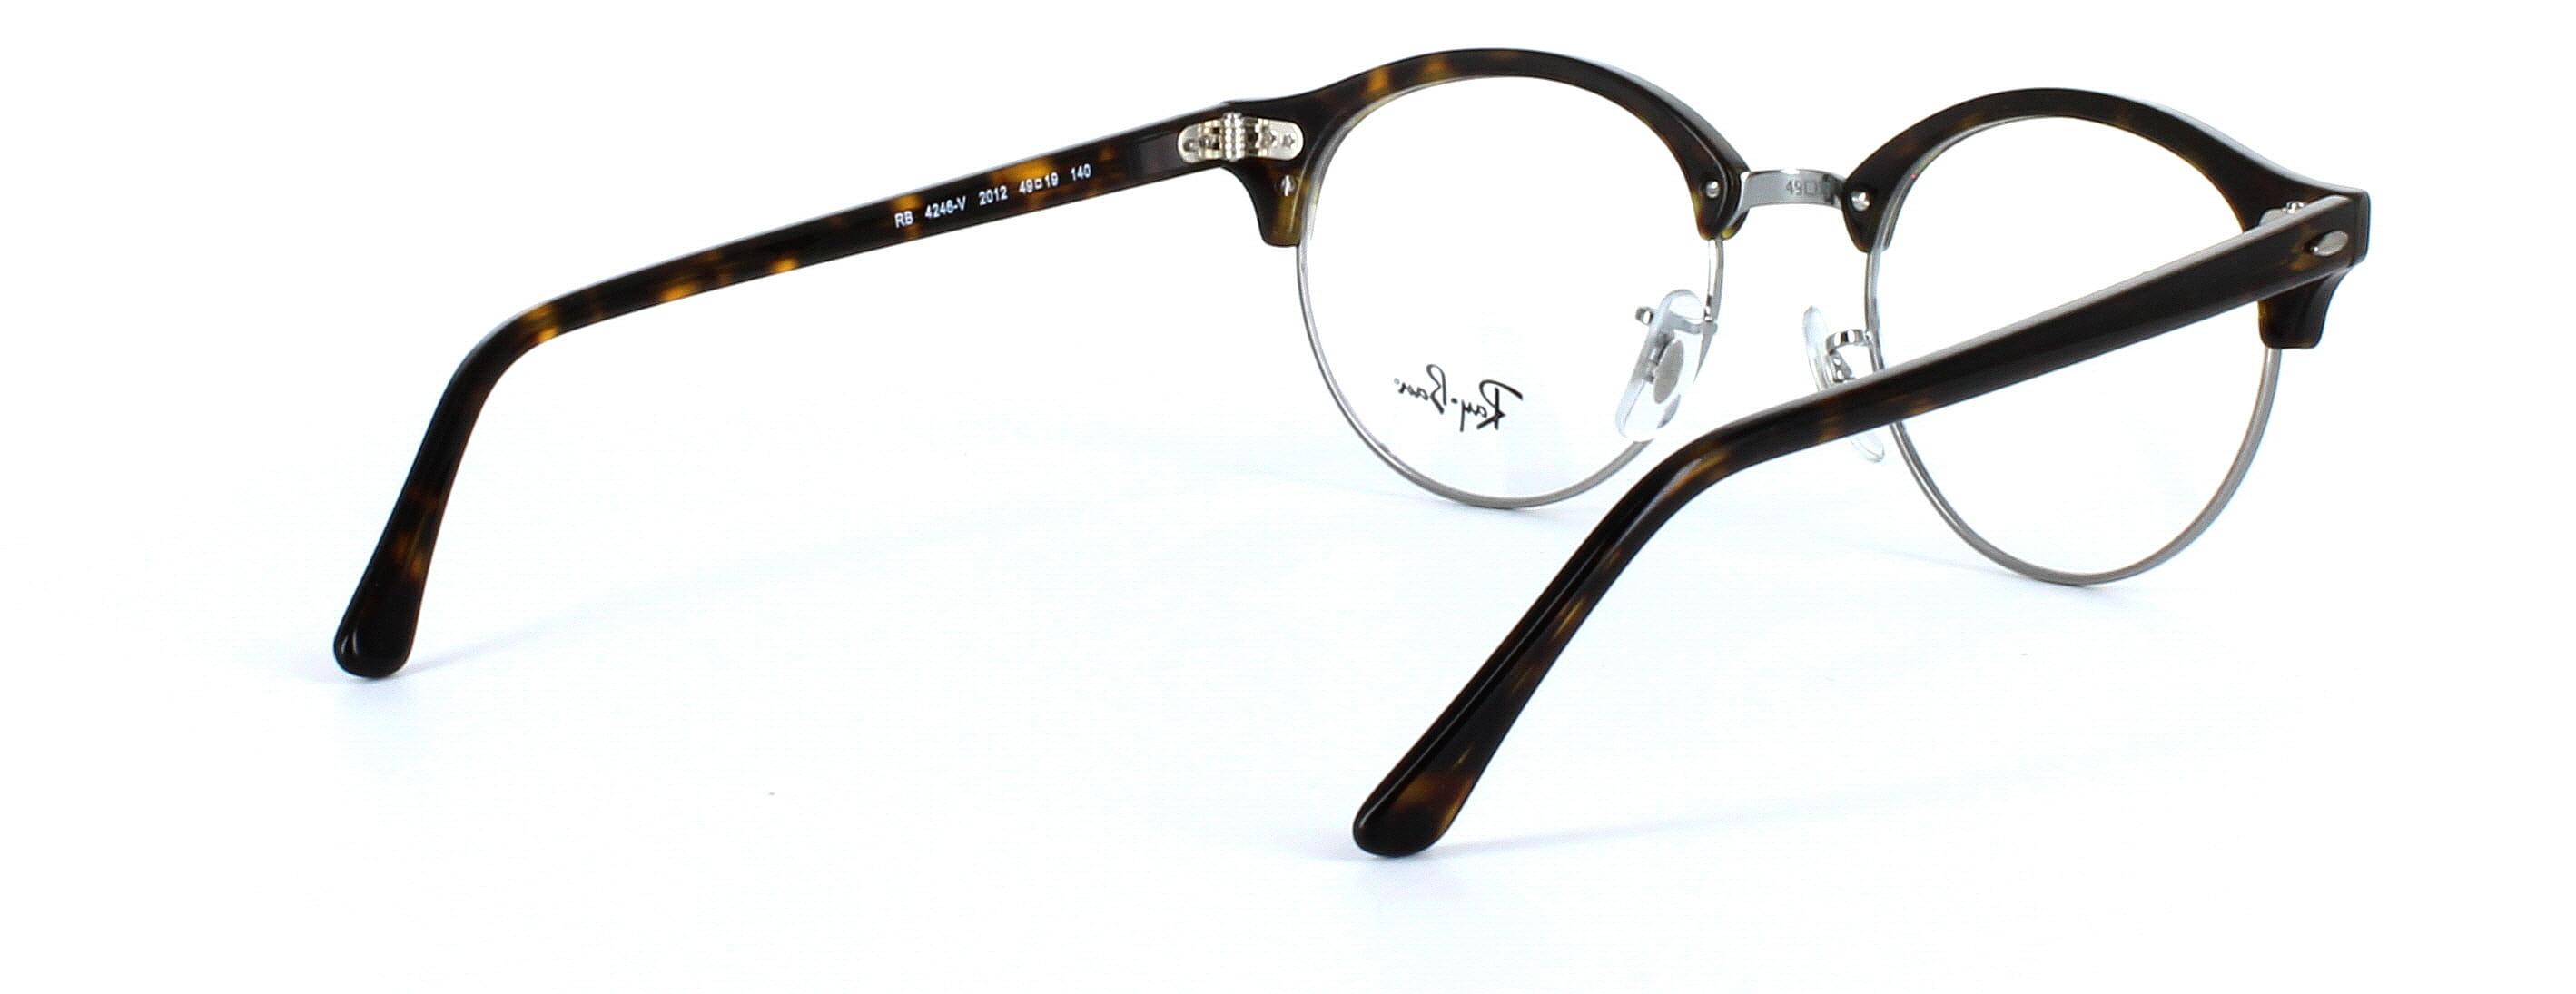 RayBan RX4246V glasses frame - image 4